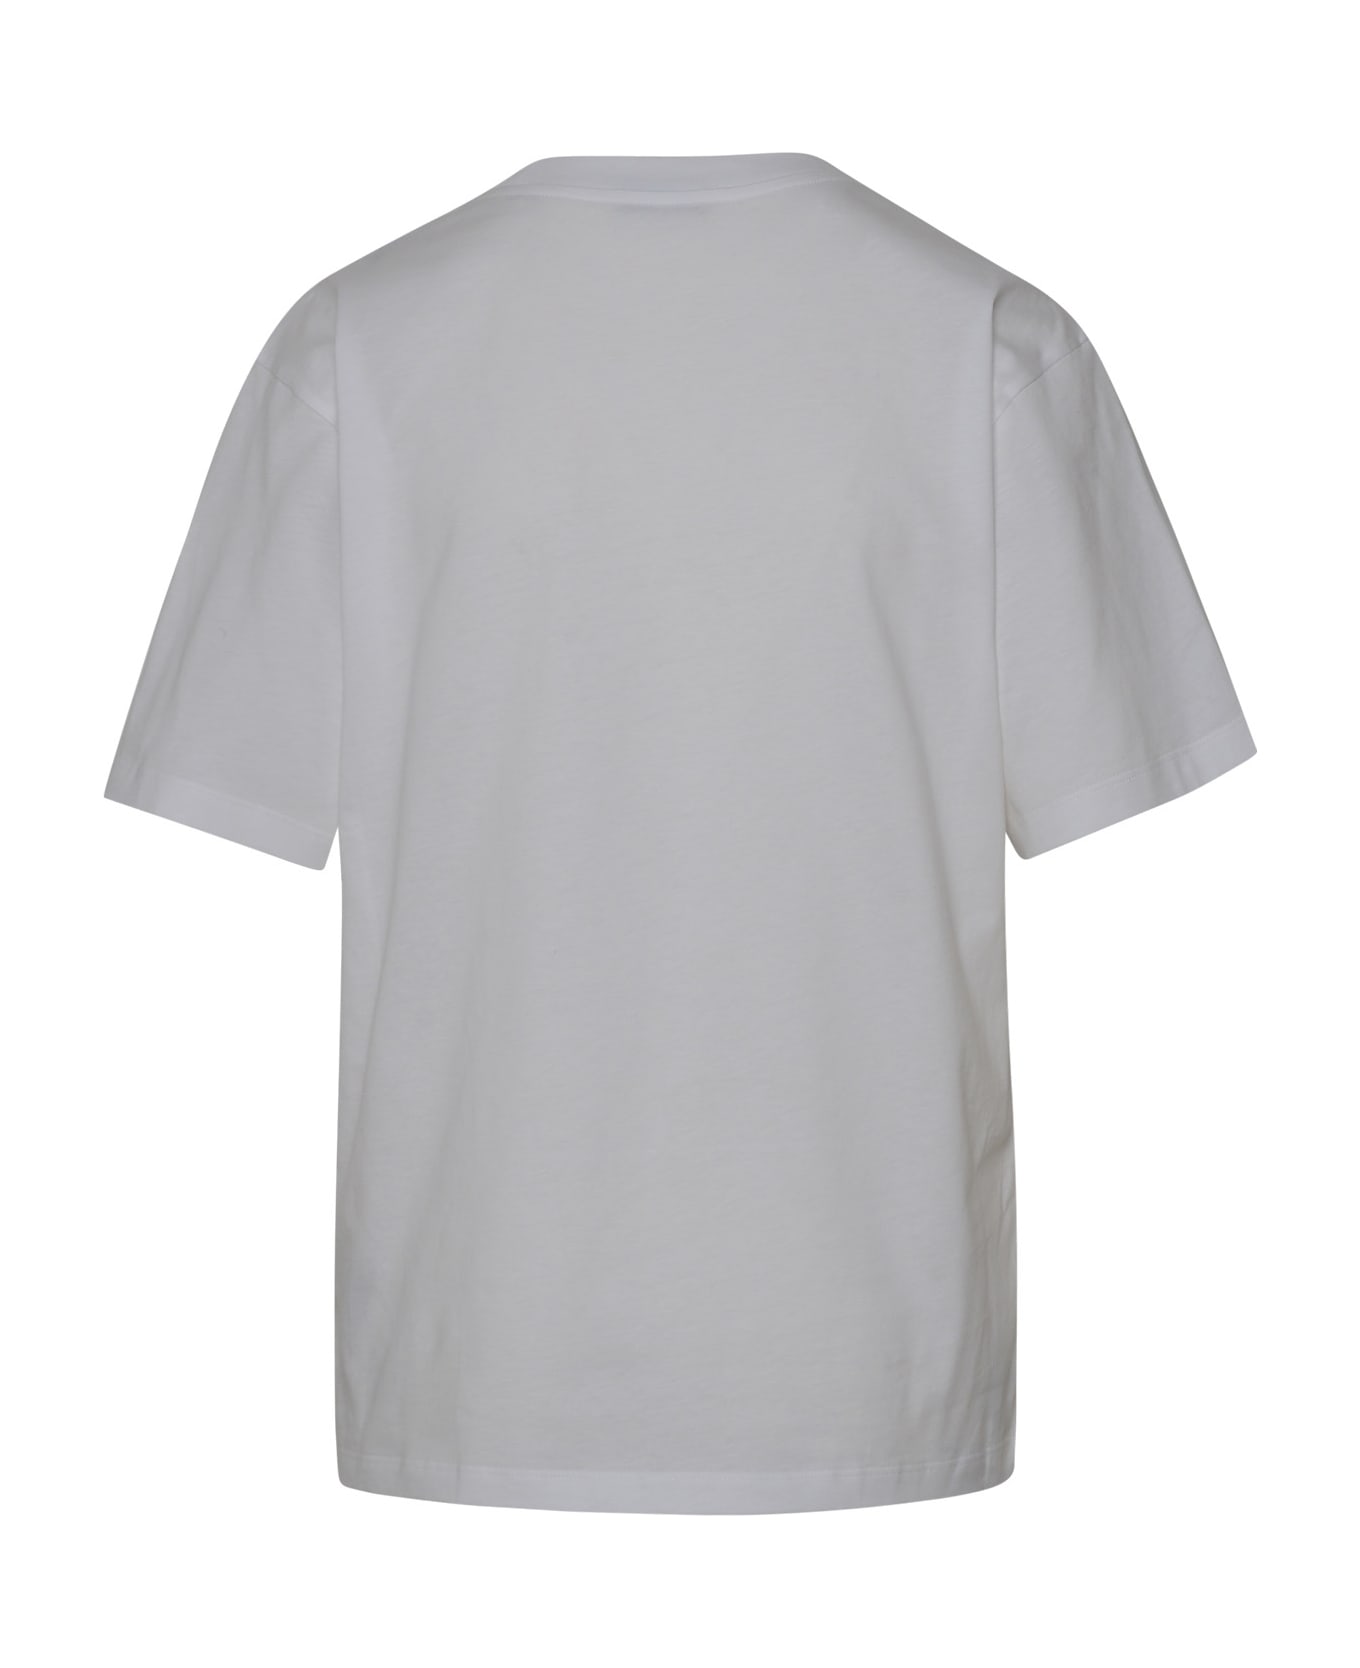 Moncler White Cotton T-shirt - White